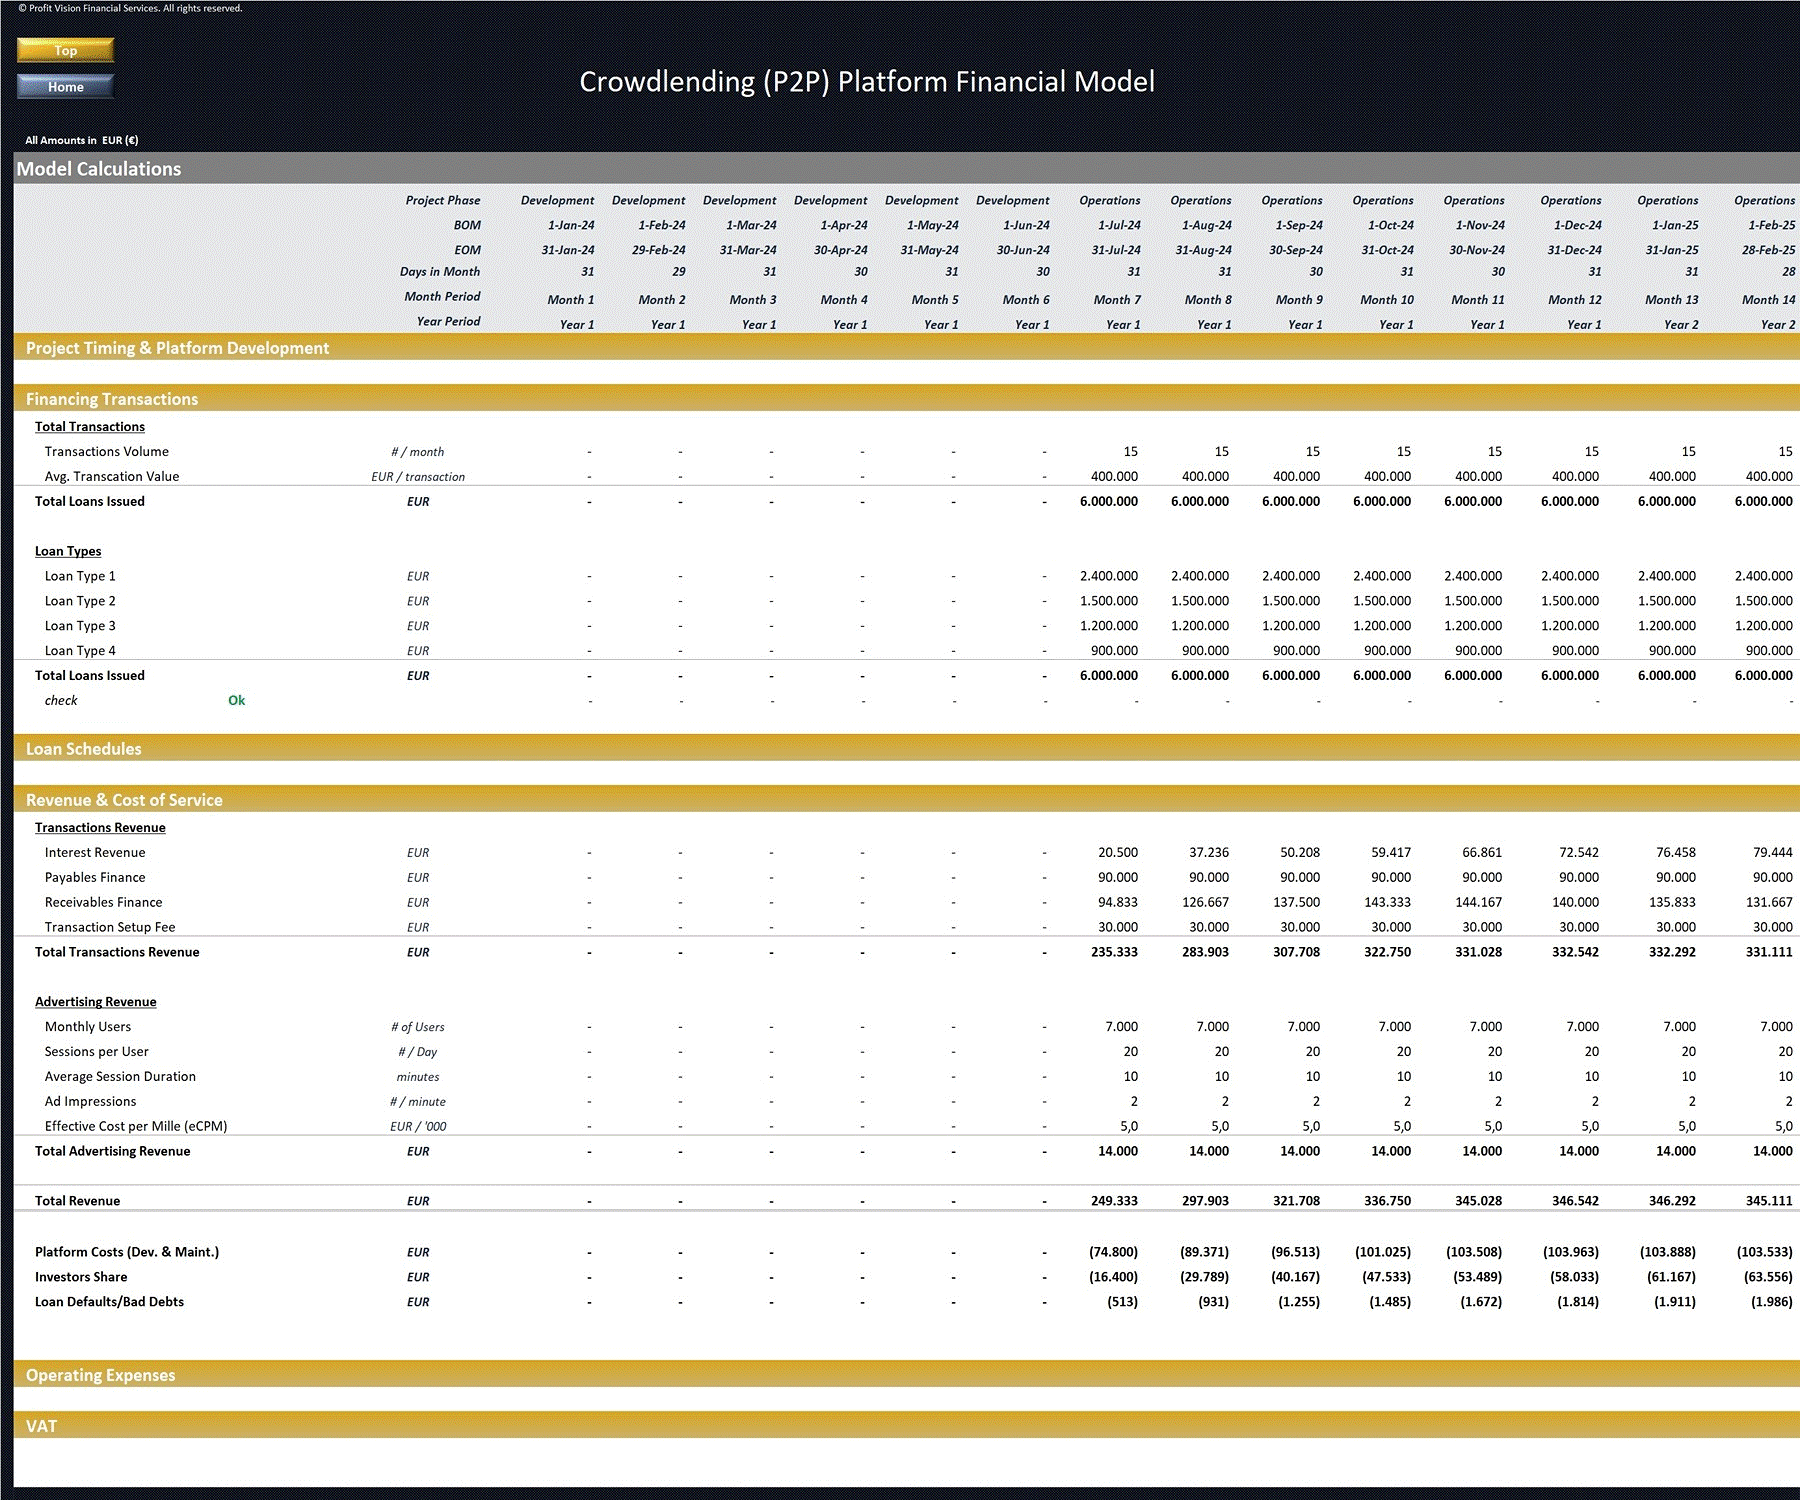 Crowdlending (P2P) Platform - 5 Year Financial Model (Excel template (XLSX)) Preview Image